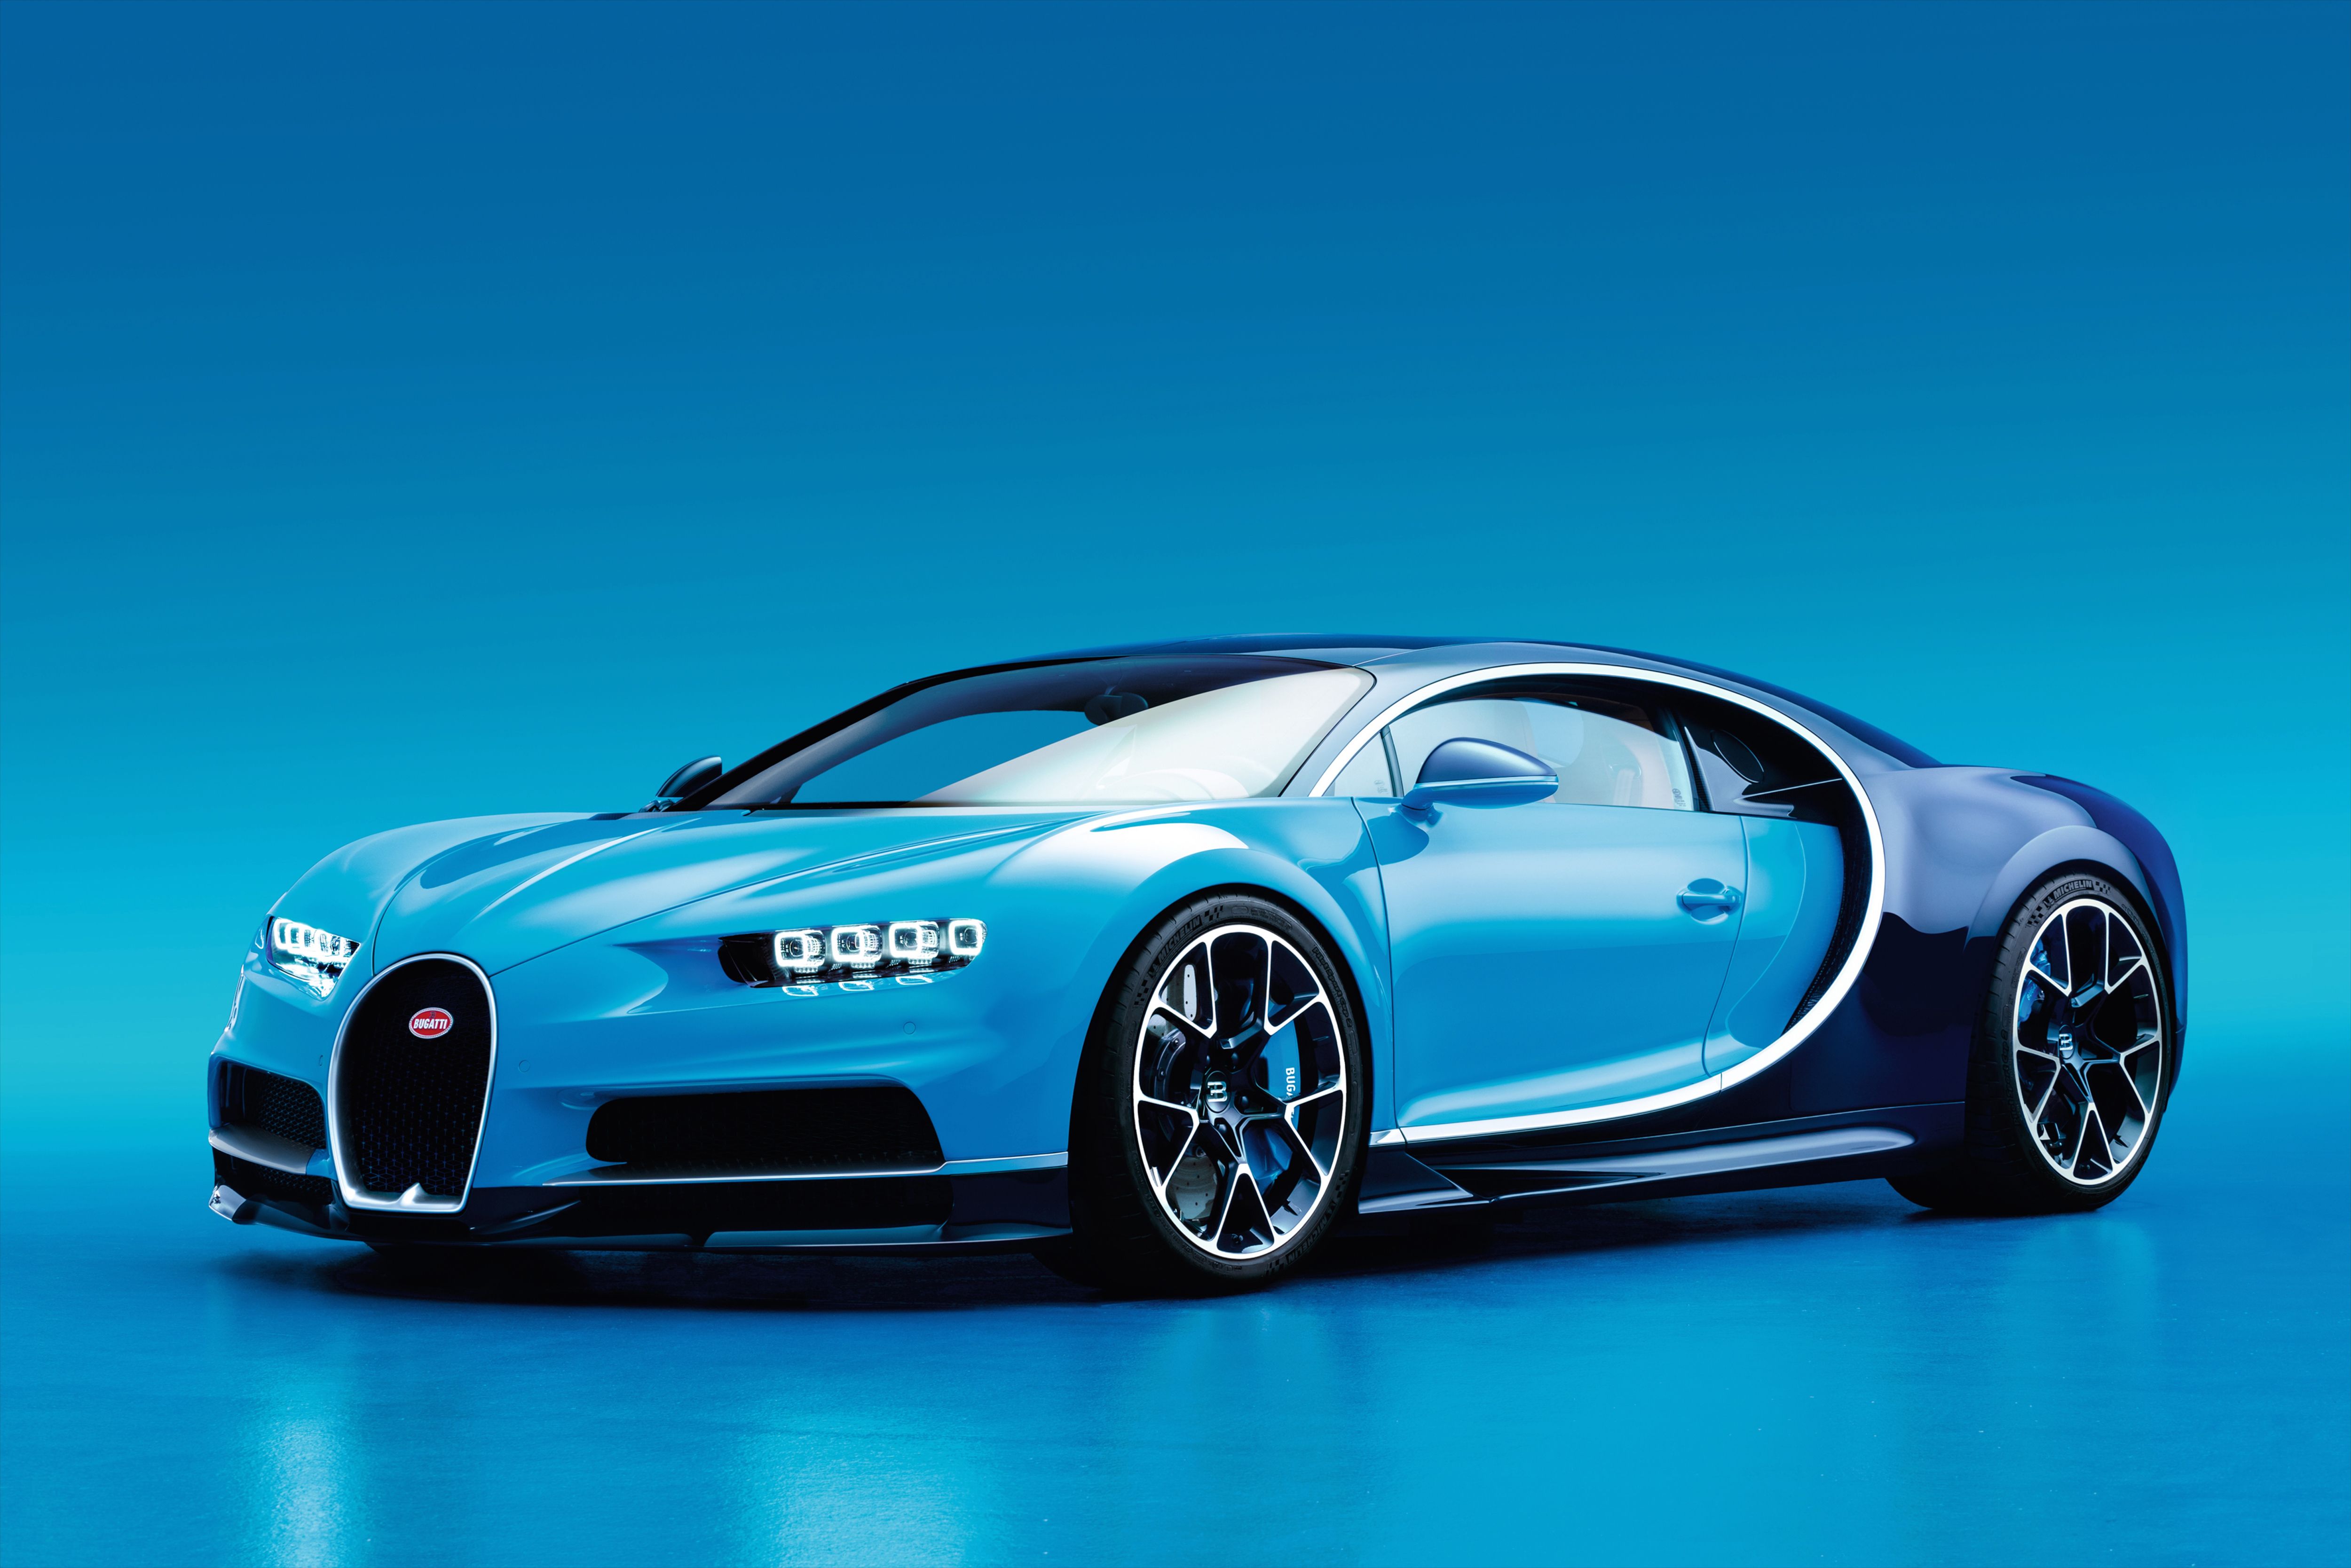 Bugatti Hintergrundbild 5000x3335. 4K Supercar Wallpaper and Background Image